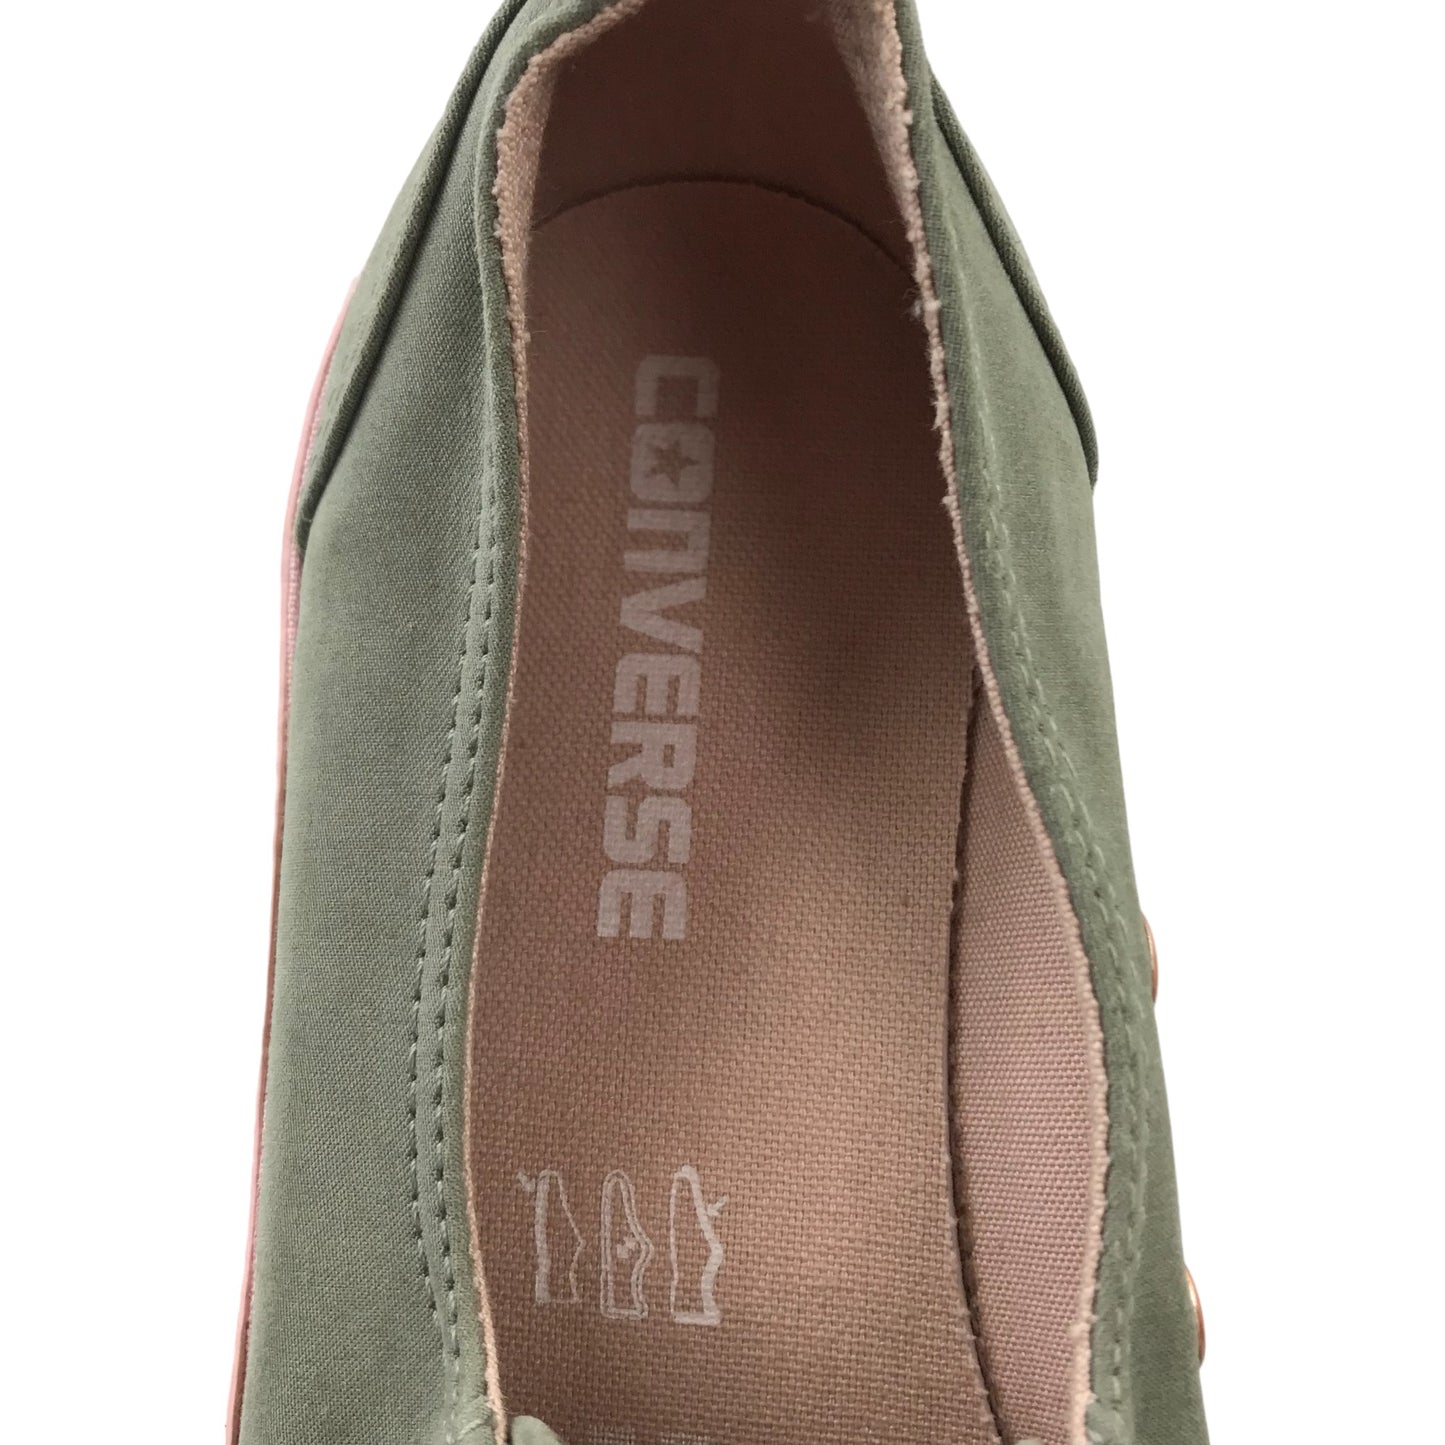 Converse Trainers Shoe Size 3.5 Khaki Green Ballet Style Lace Slip